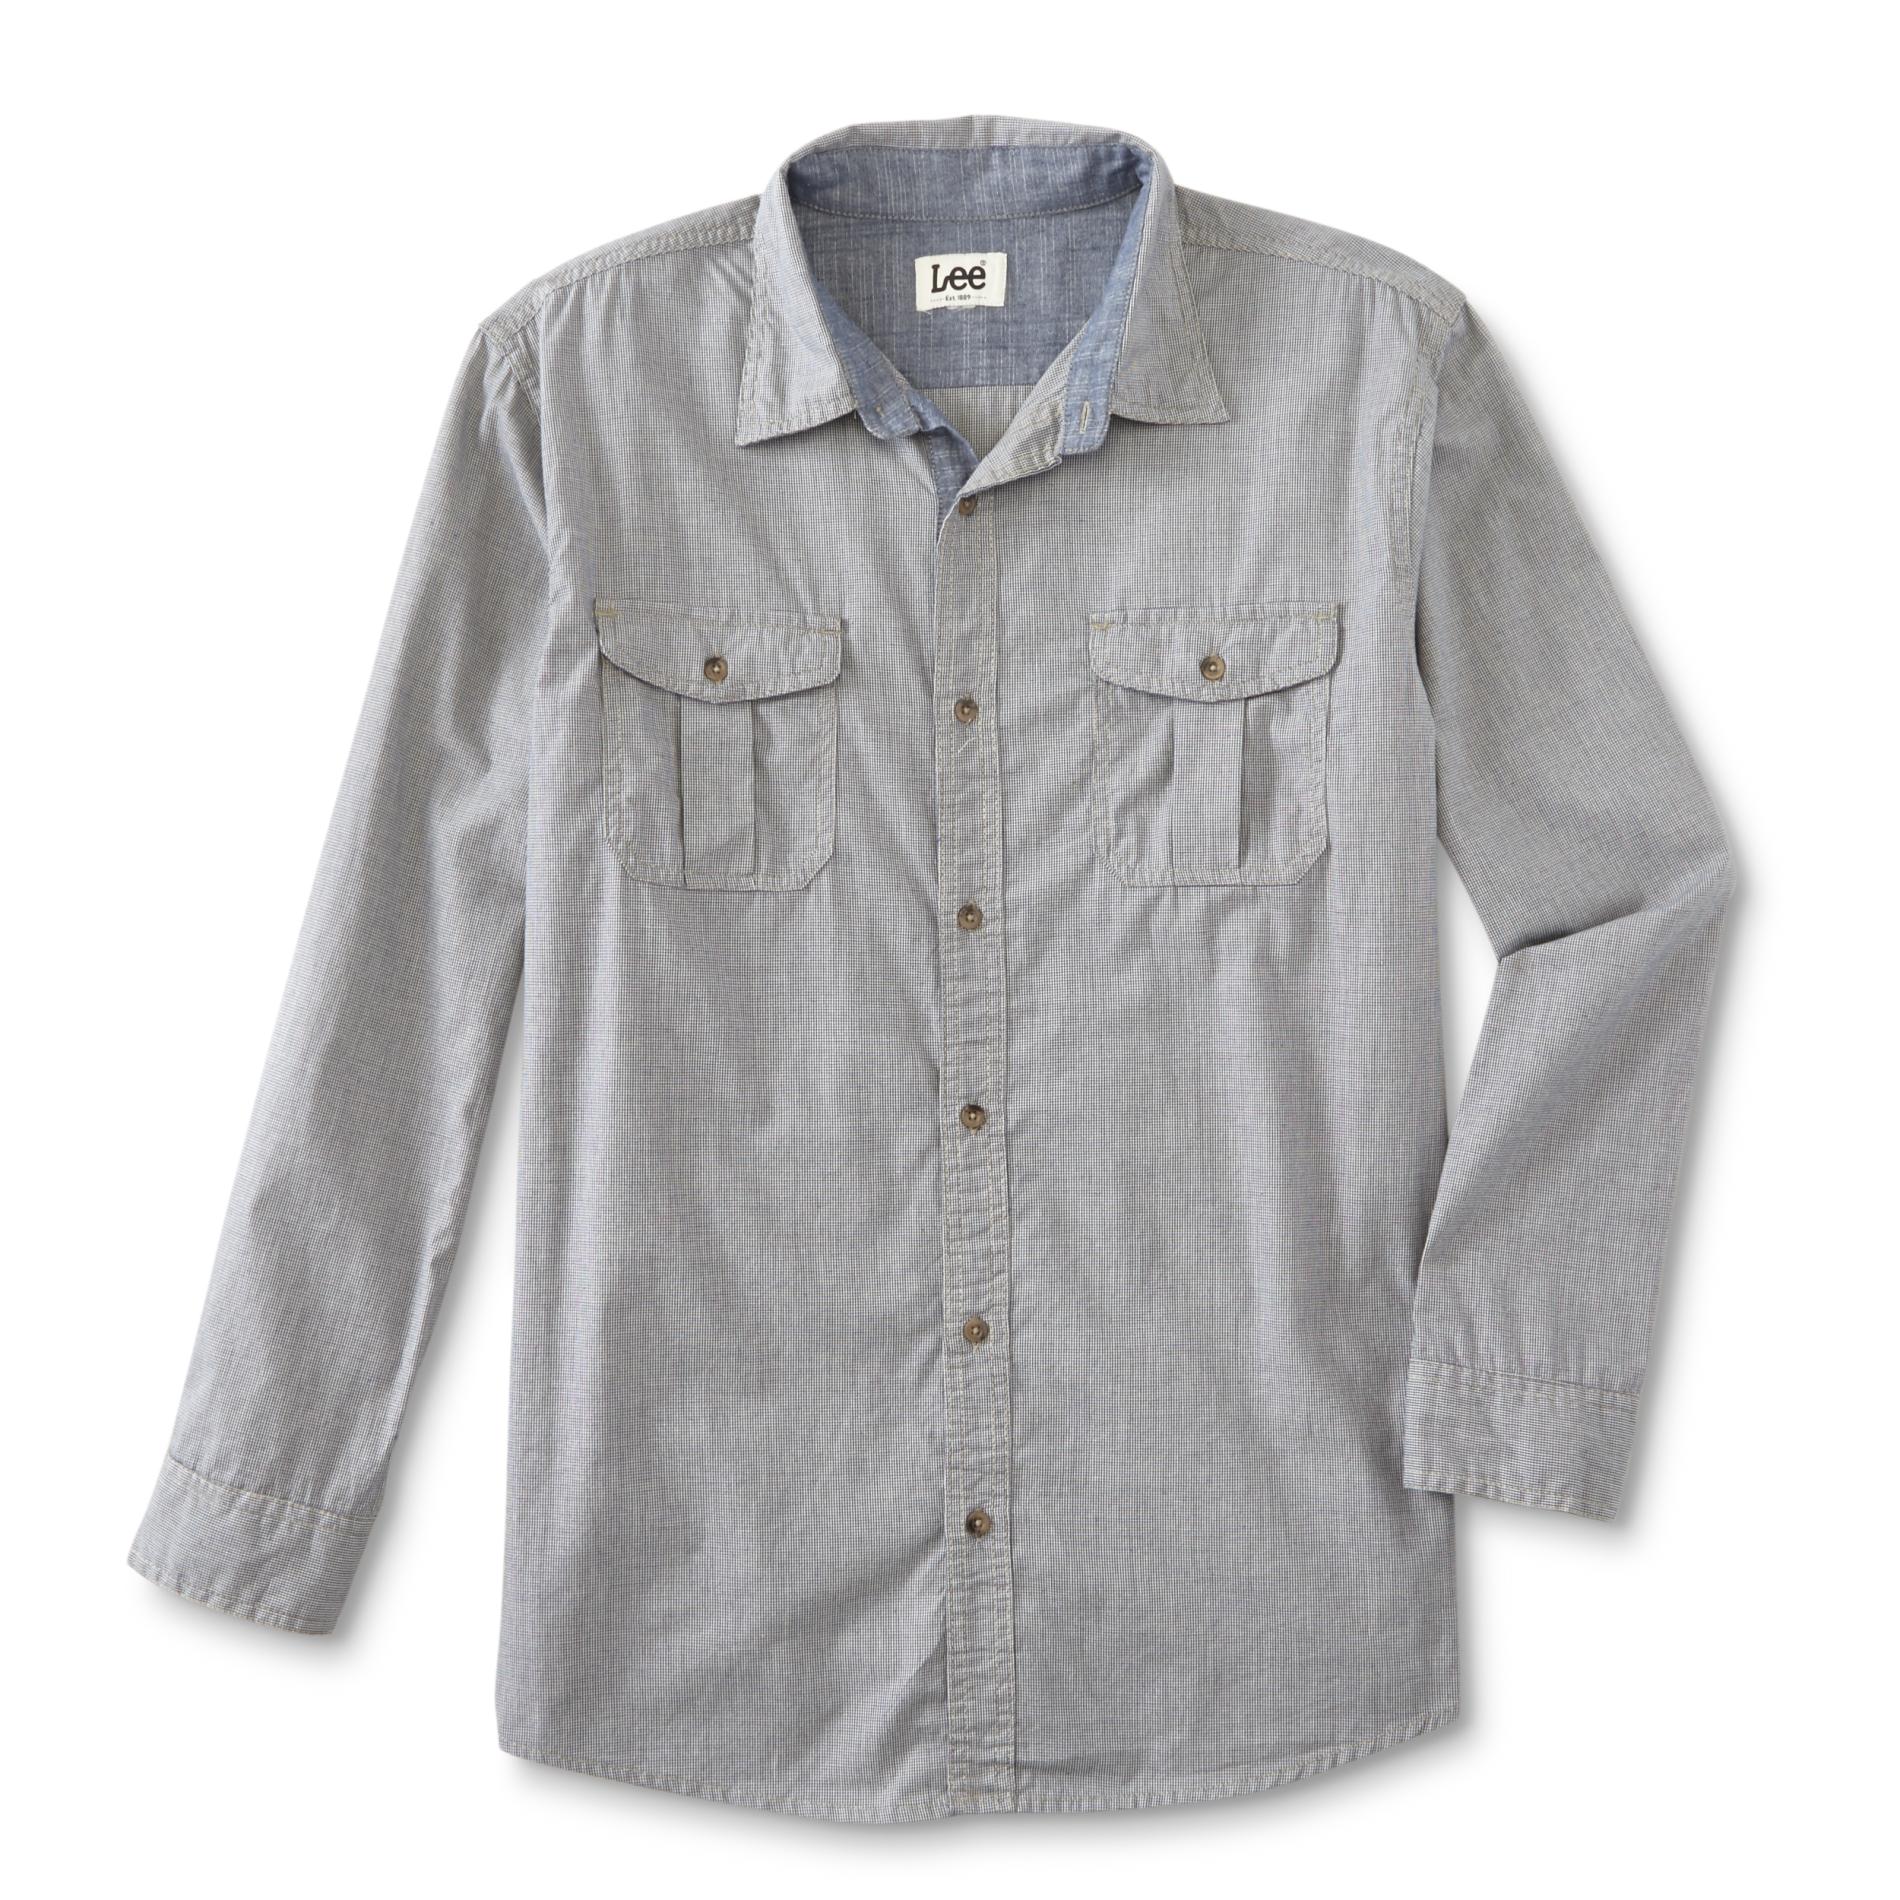 LEE Men's Button-Front Shirt - Microcheck